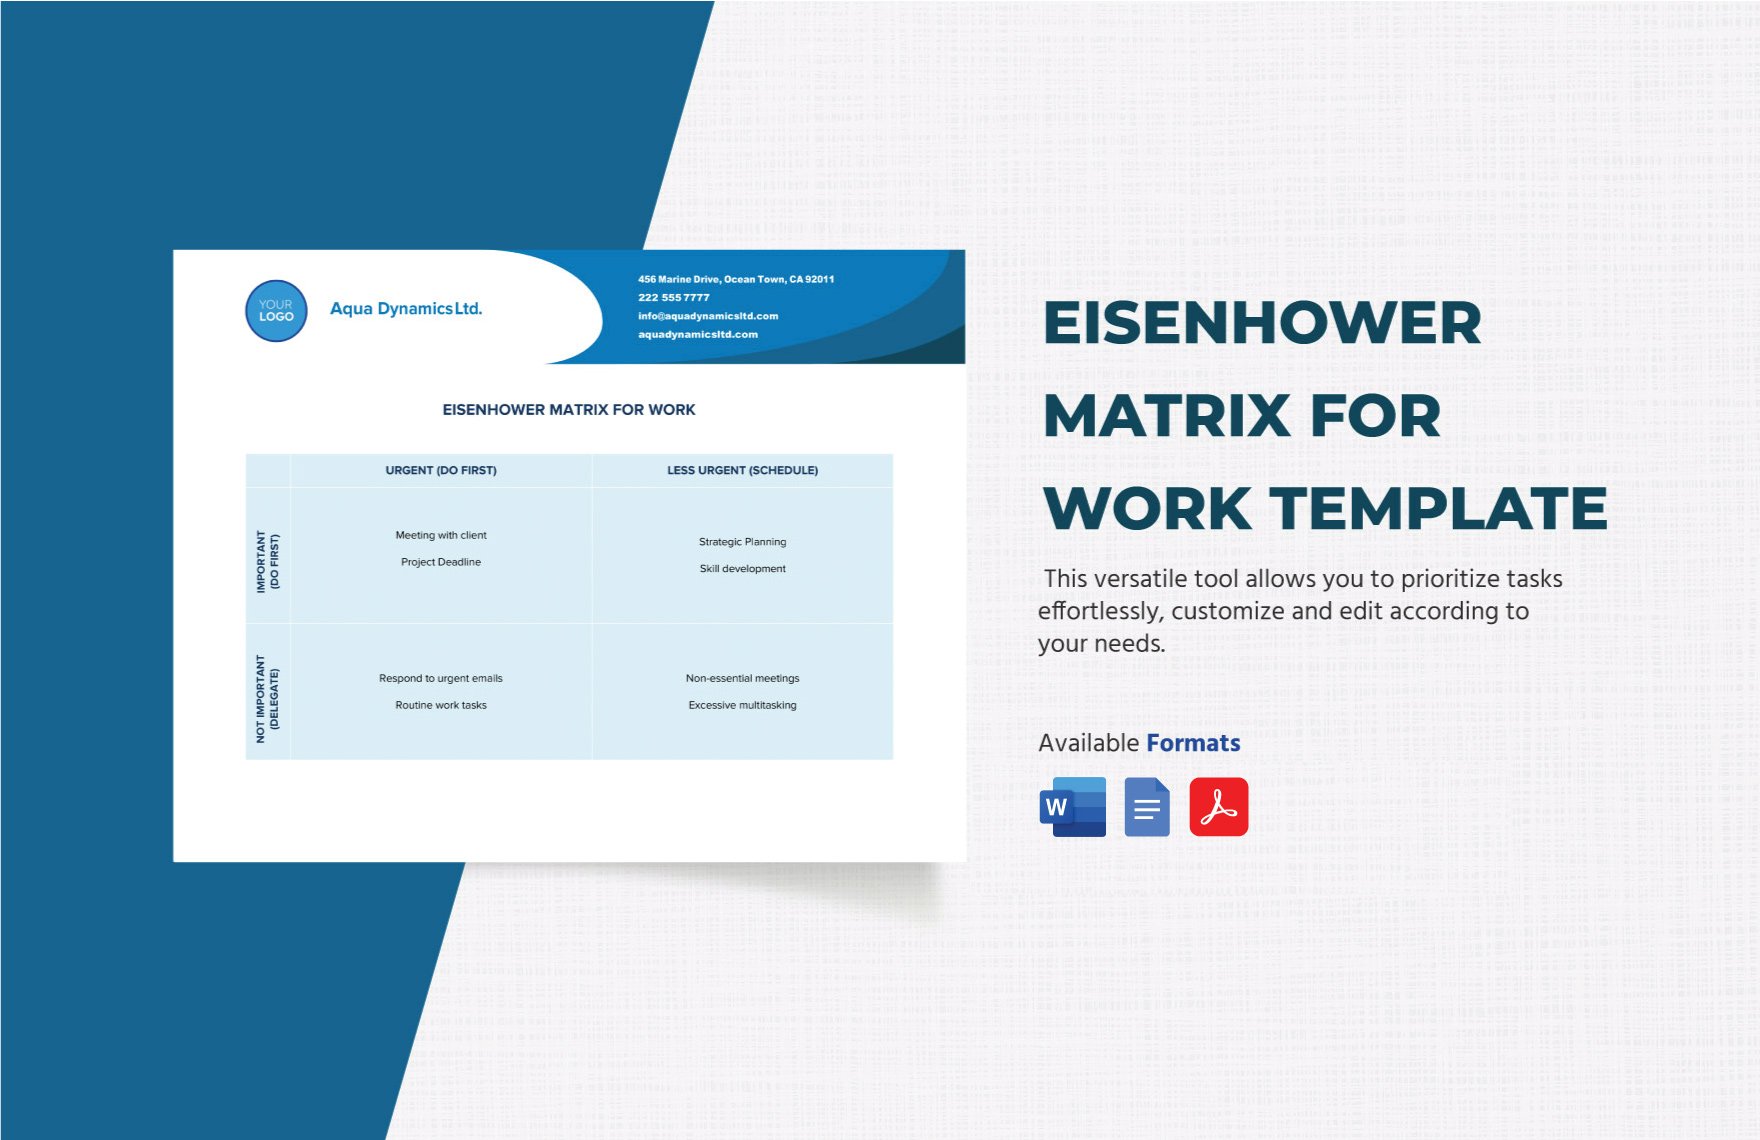 Eisenhower Matrix for Work Template